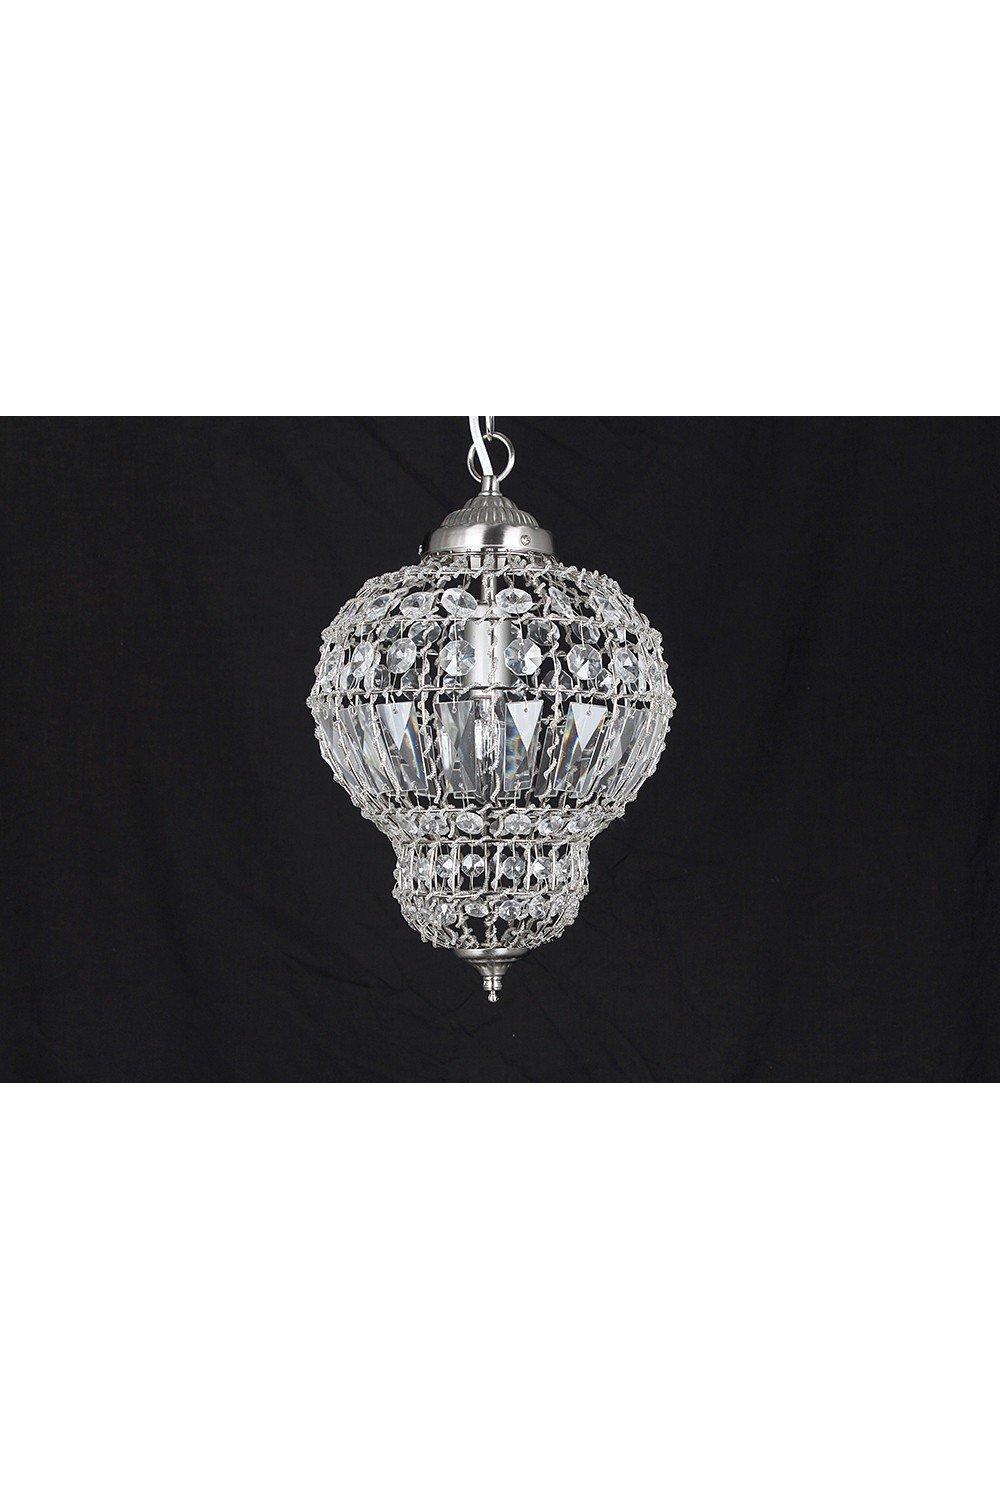 Morocco Double Crystal Basket Pendant Ceiling Light